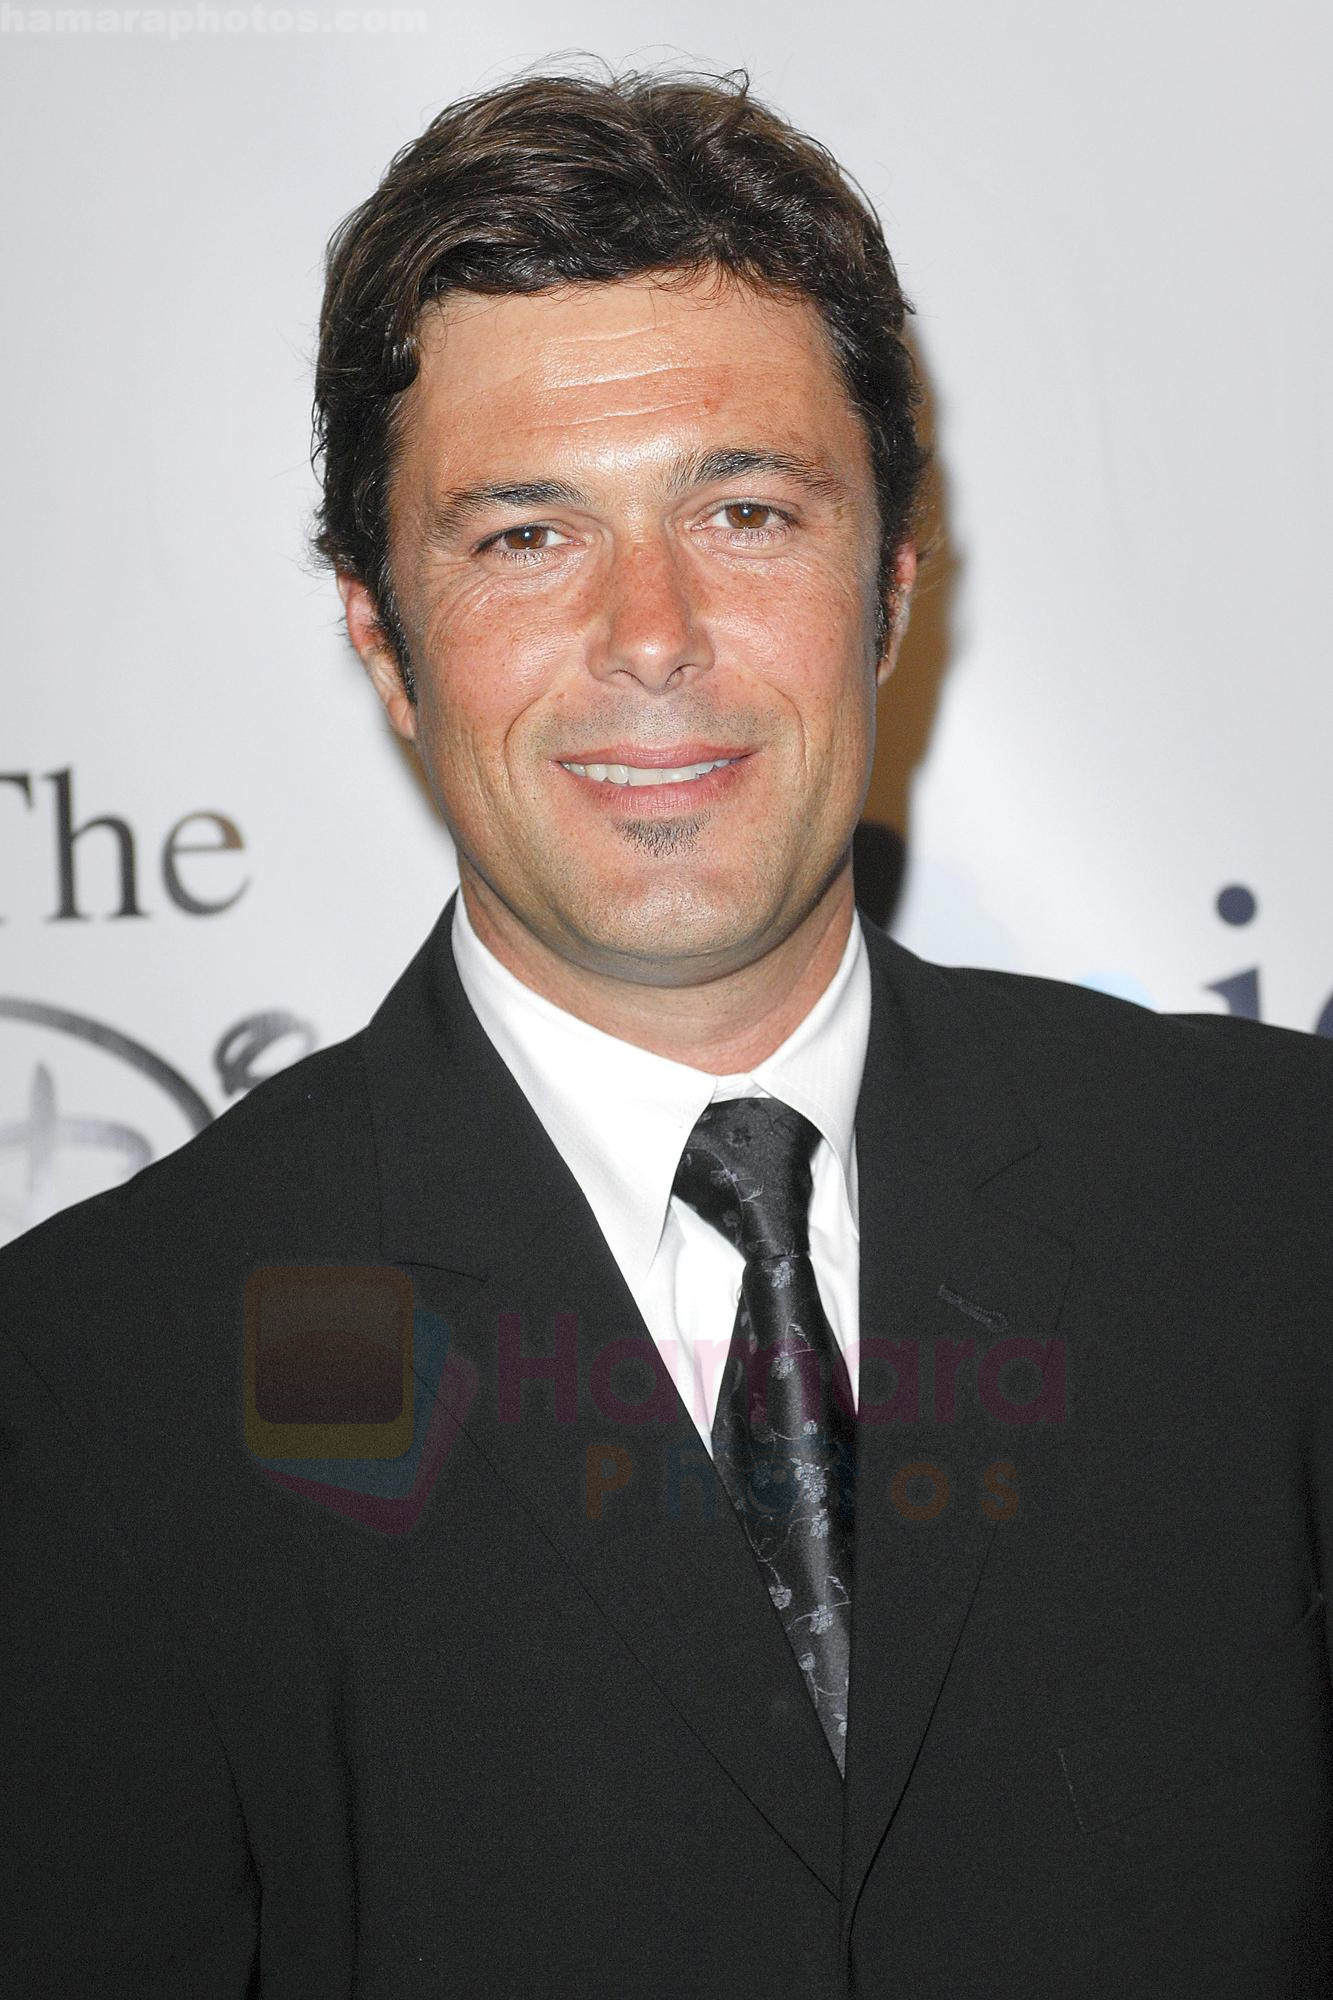 Carlos Bernard at the 24th Annual Imagen Awards held at the Beverly Hilton Hotel Los Angeles, California on 21.08.09 - IANS-WENN